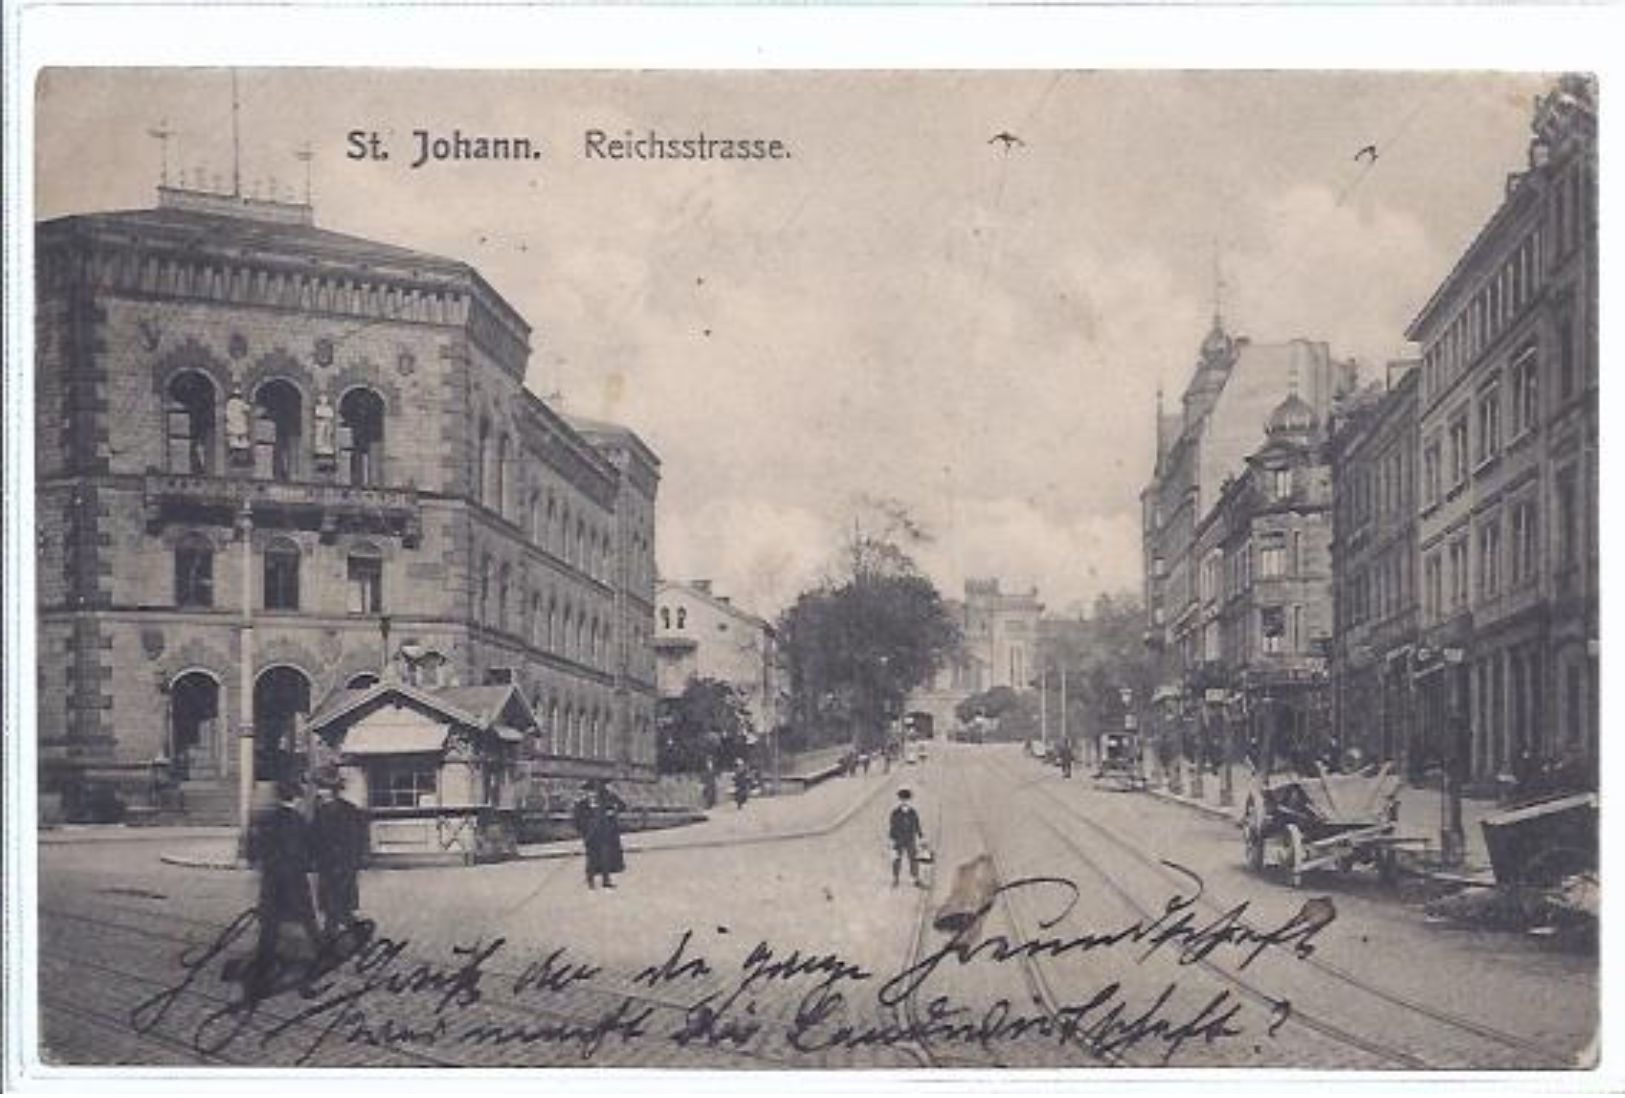 St. Johann    - Saar - Reichsstrasse   - **AK-87900** - Saarbruecken